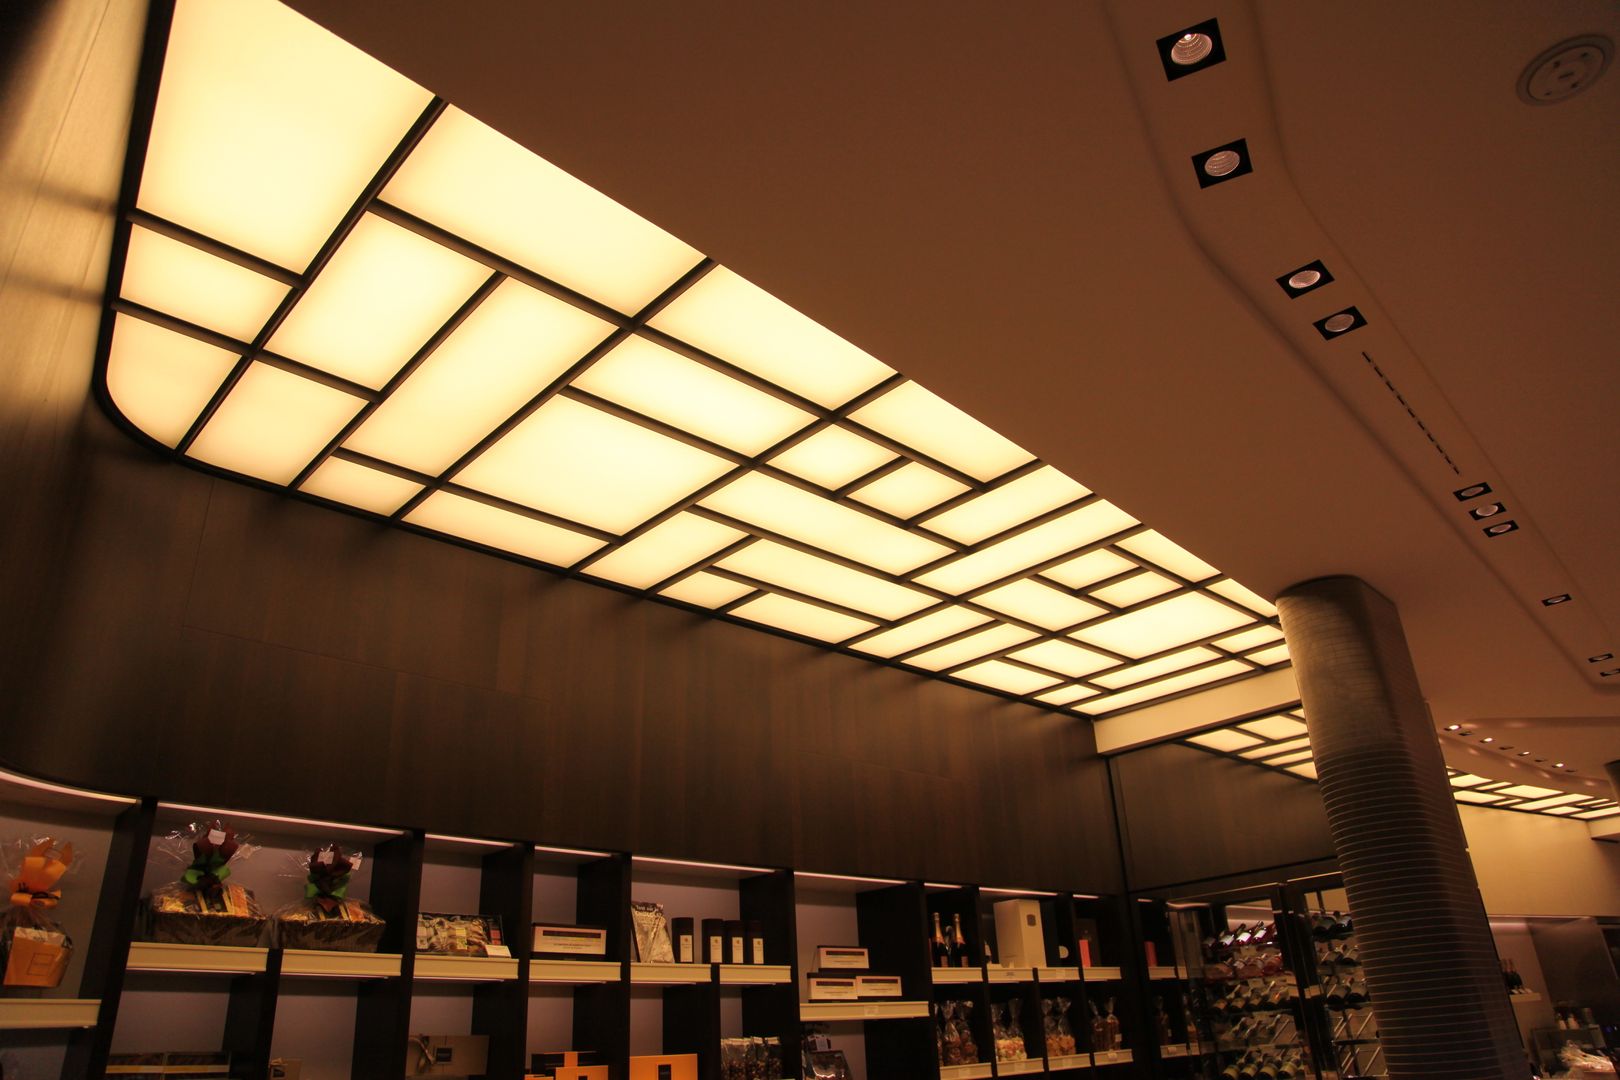 Plafond lumineux sur mesure by MOROSINI.COM, Morosini Morosini Commercial spaces Office spaces & stores